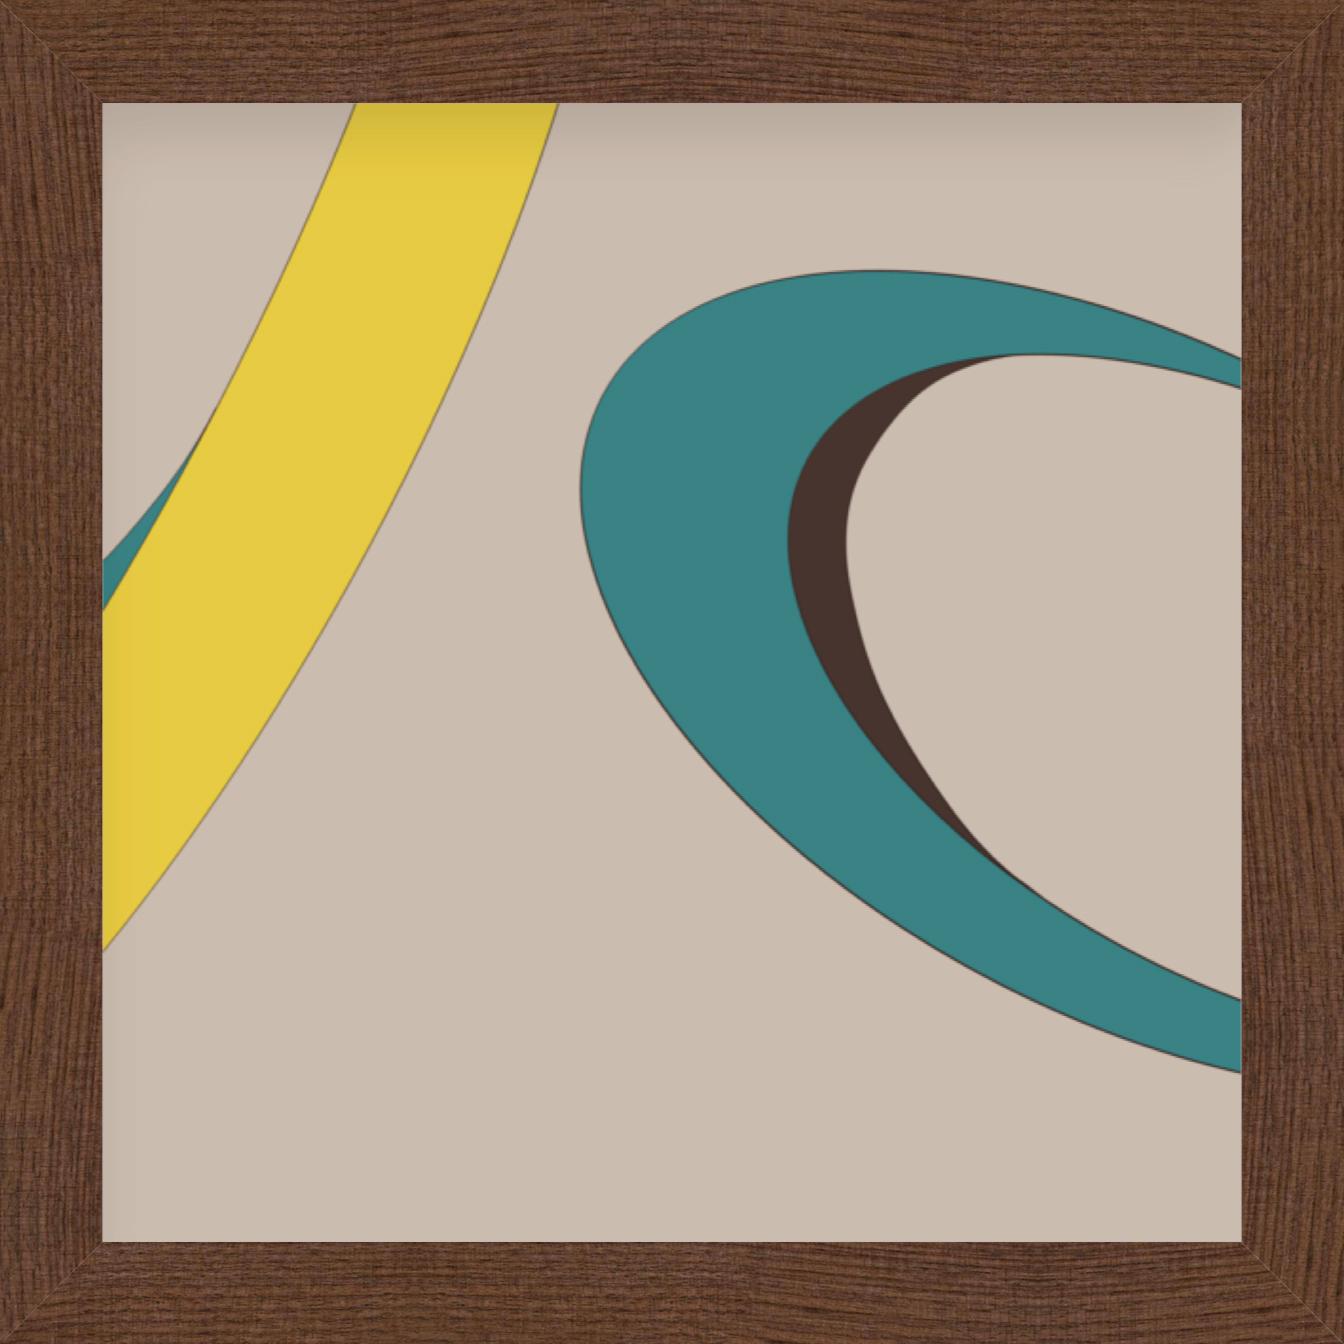 Pletneva Abstract Print – "Their eyes" - abstract digital print, blue and yellow